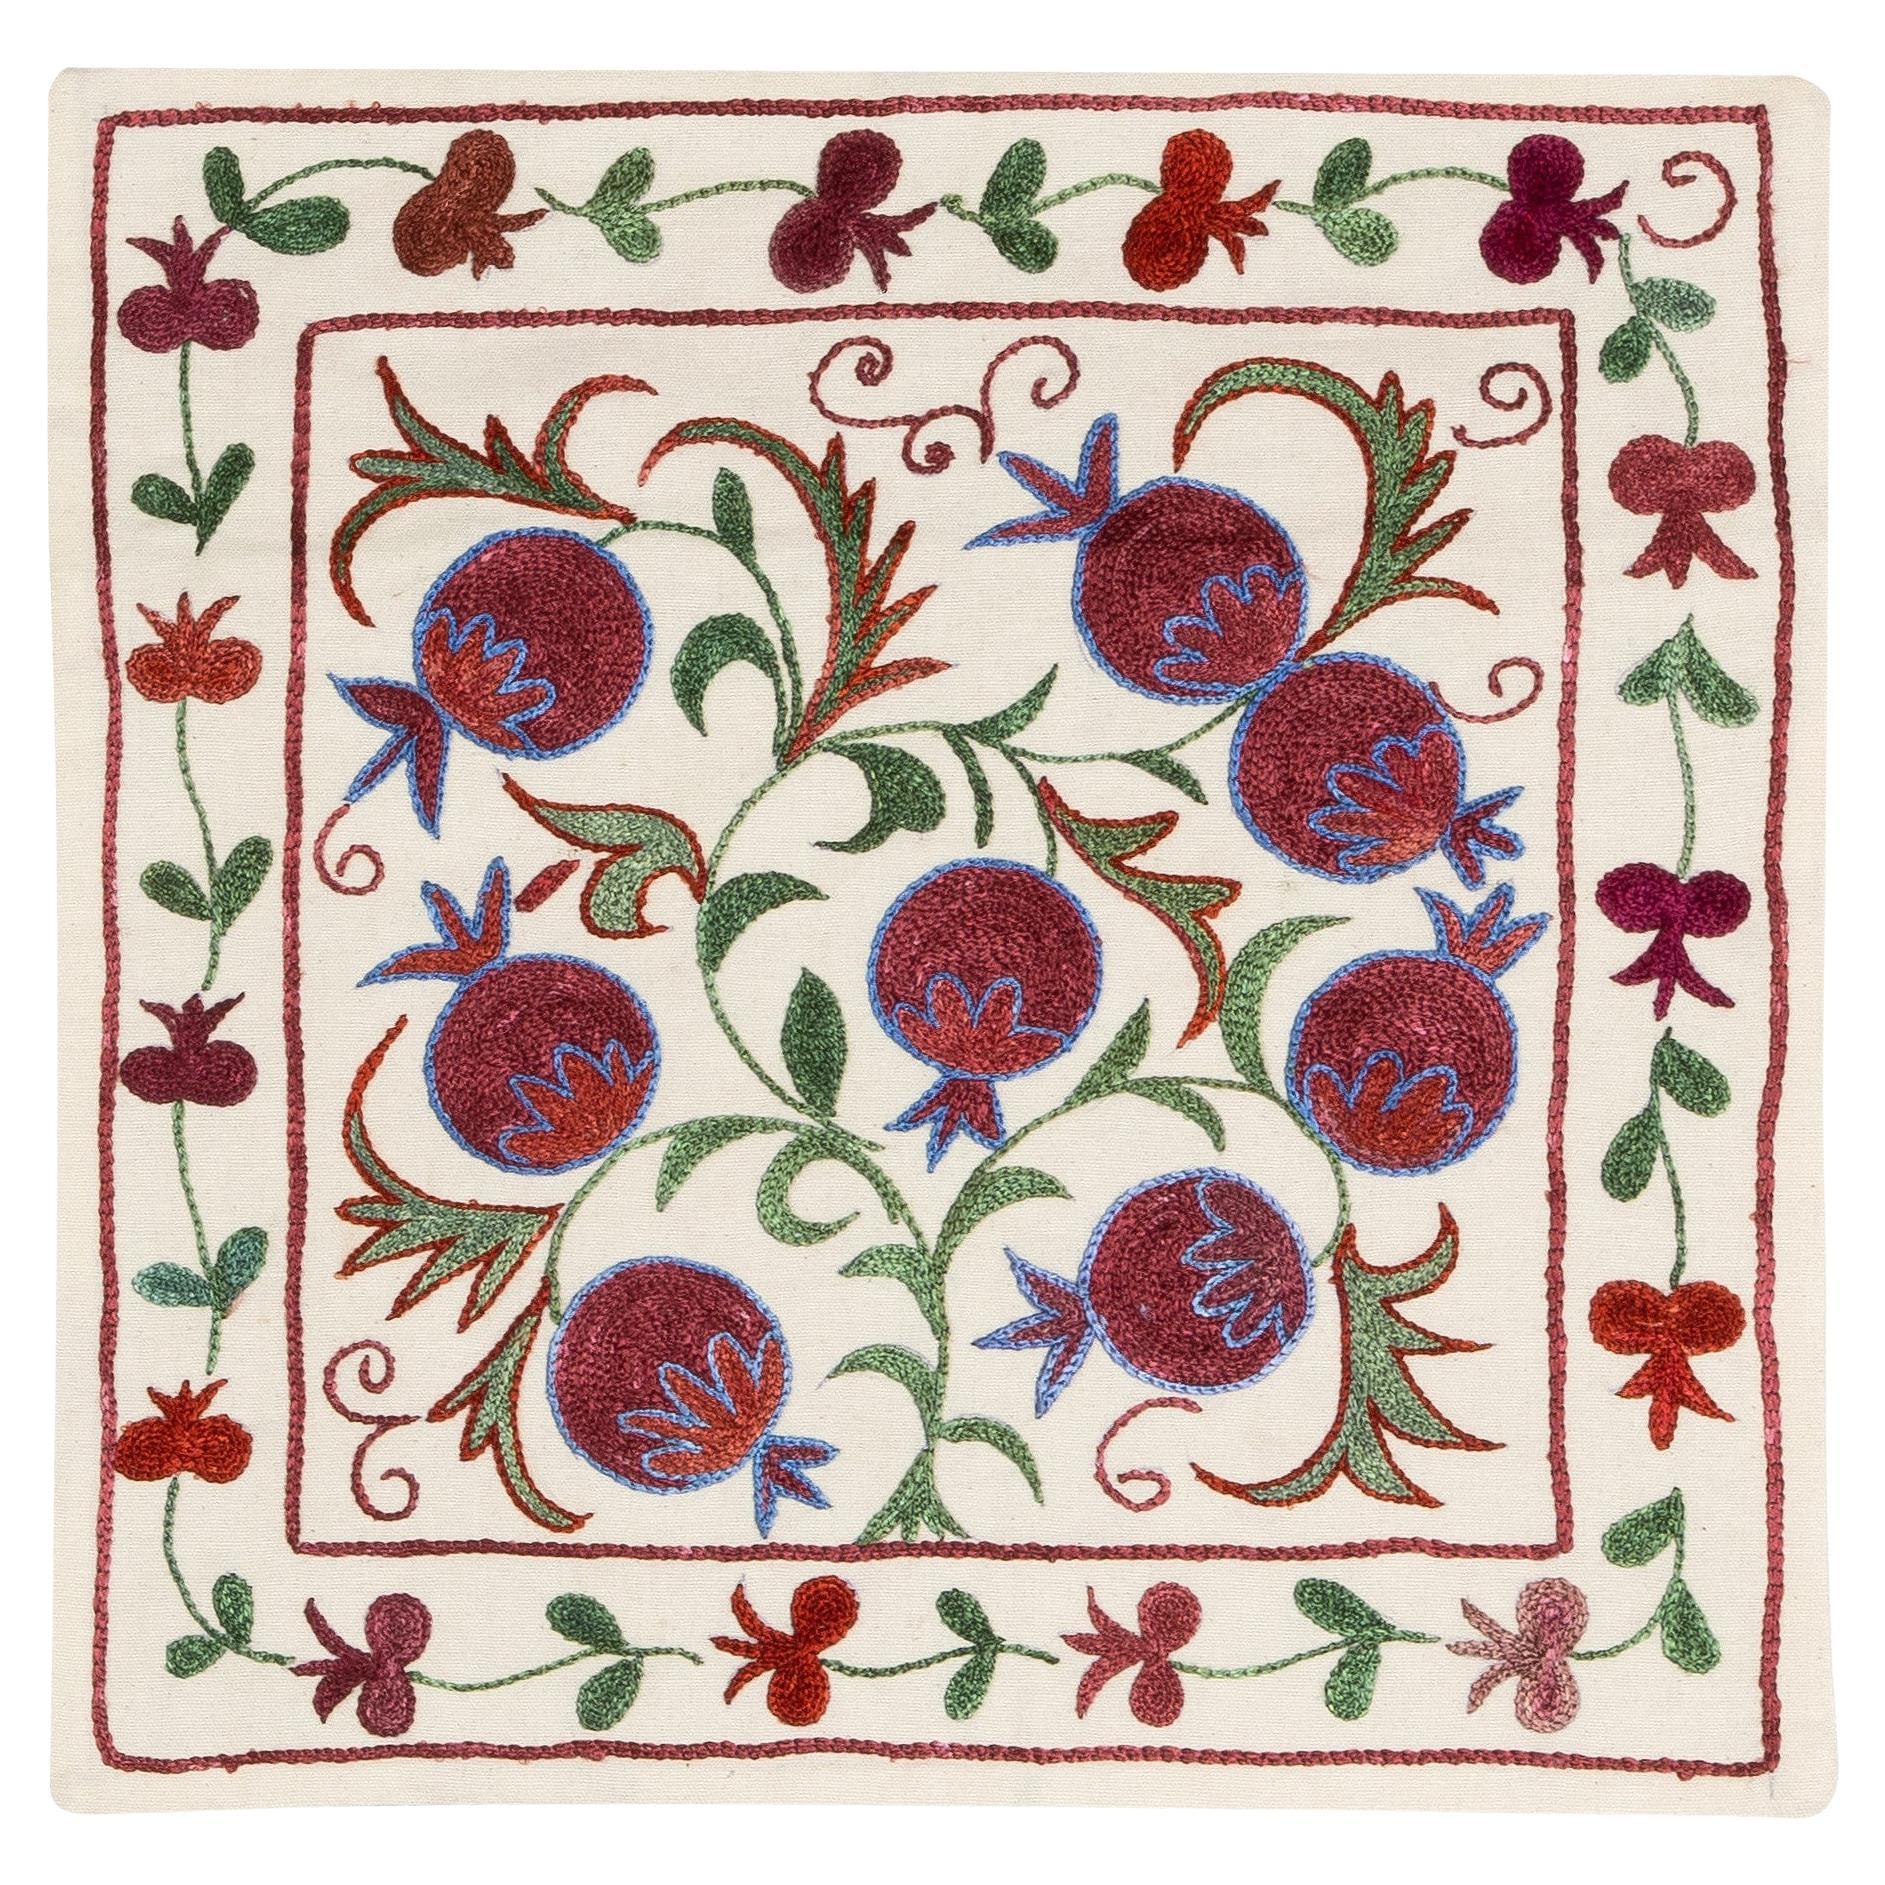 Uzbek Pomegranate Tree Design Silk Embroidered Suzani Cushion Cover. 19" x 19"